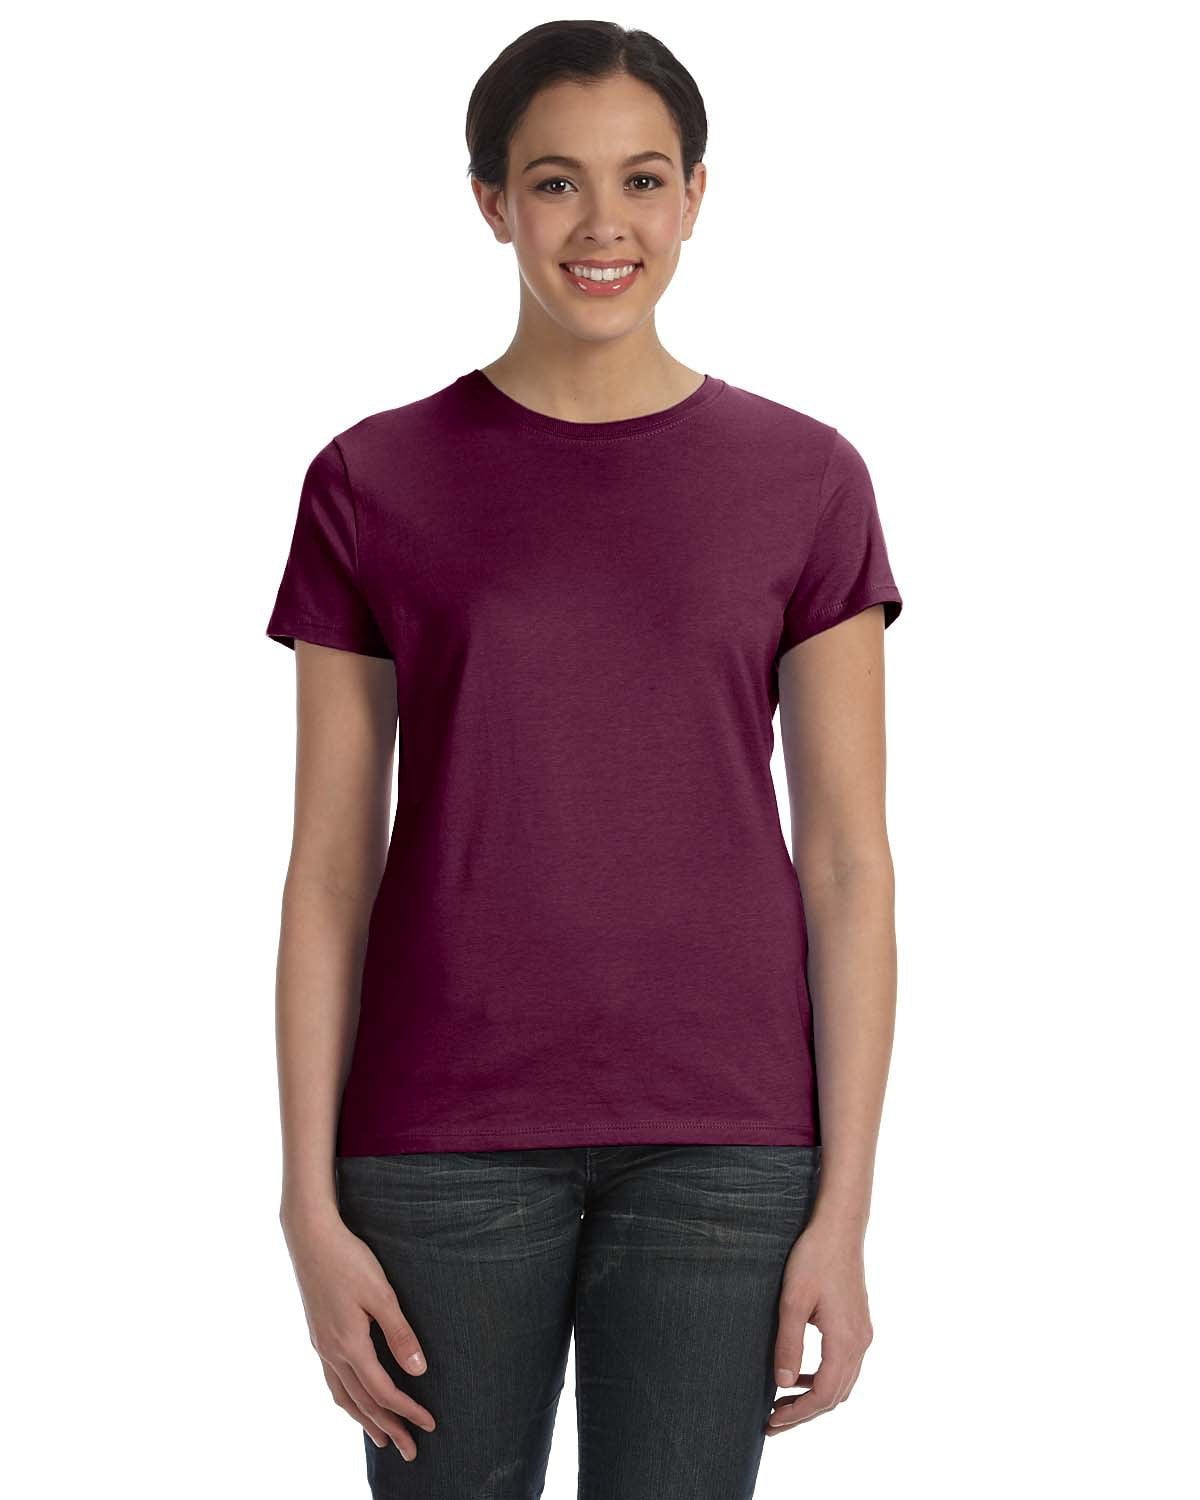 Hanes Ladies' 4.5 oz., 100% Ringspun Cotton nano-T T-Shirt - SL04 